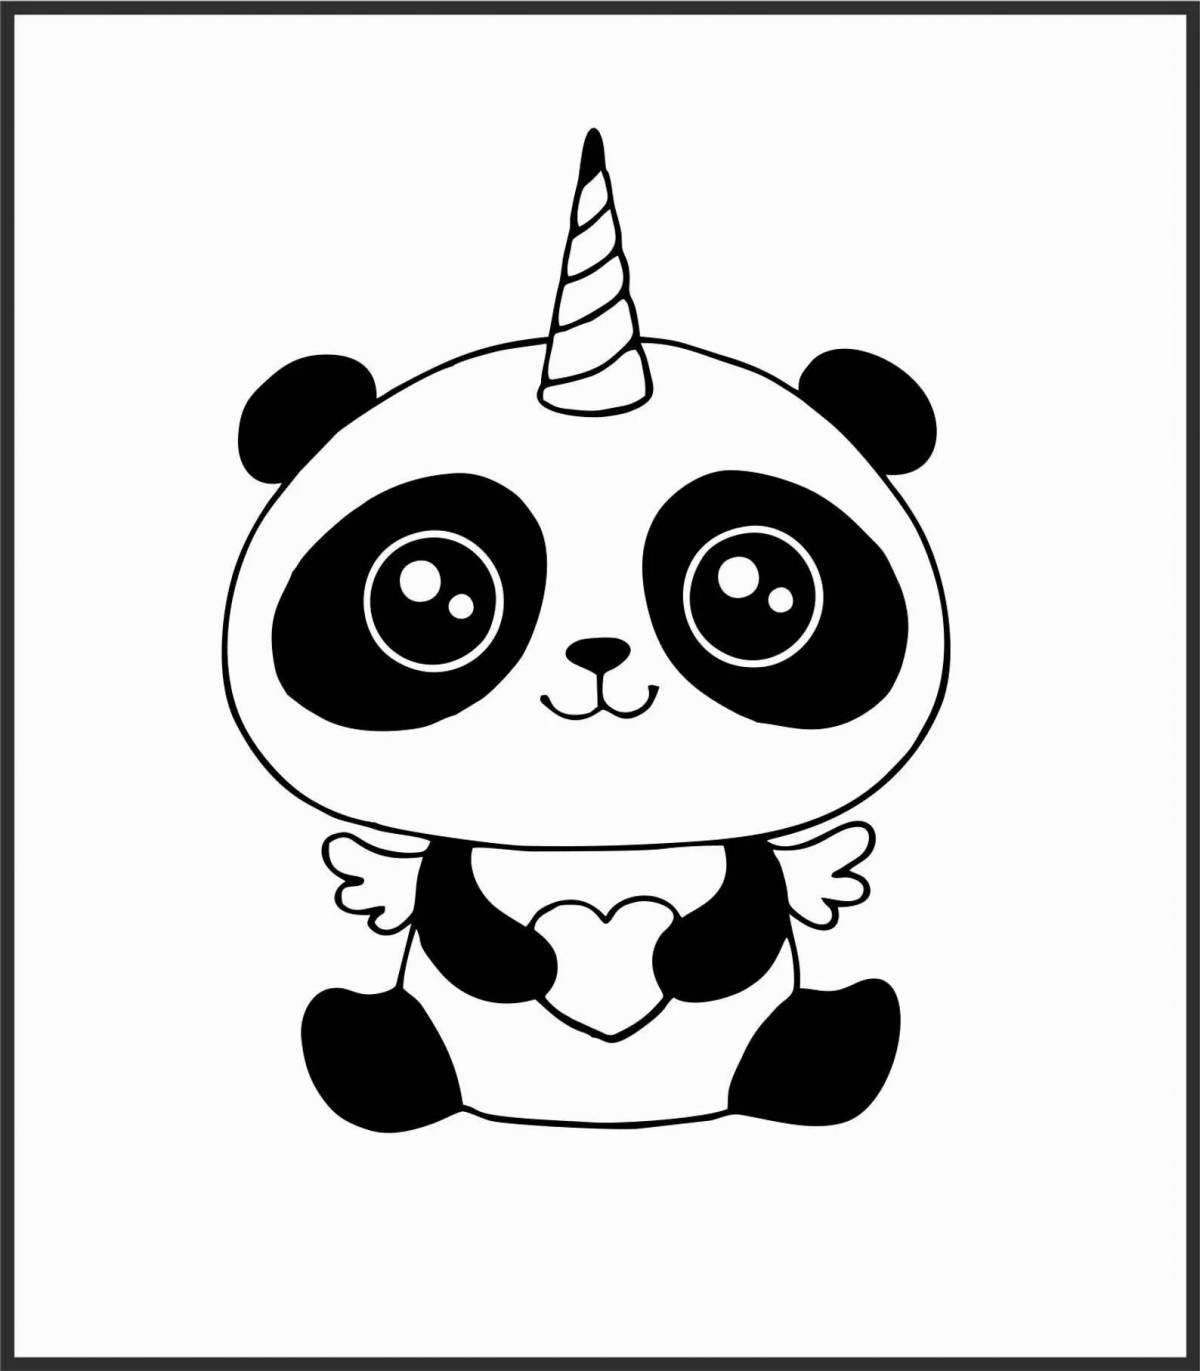 Coloring page adorable little panda